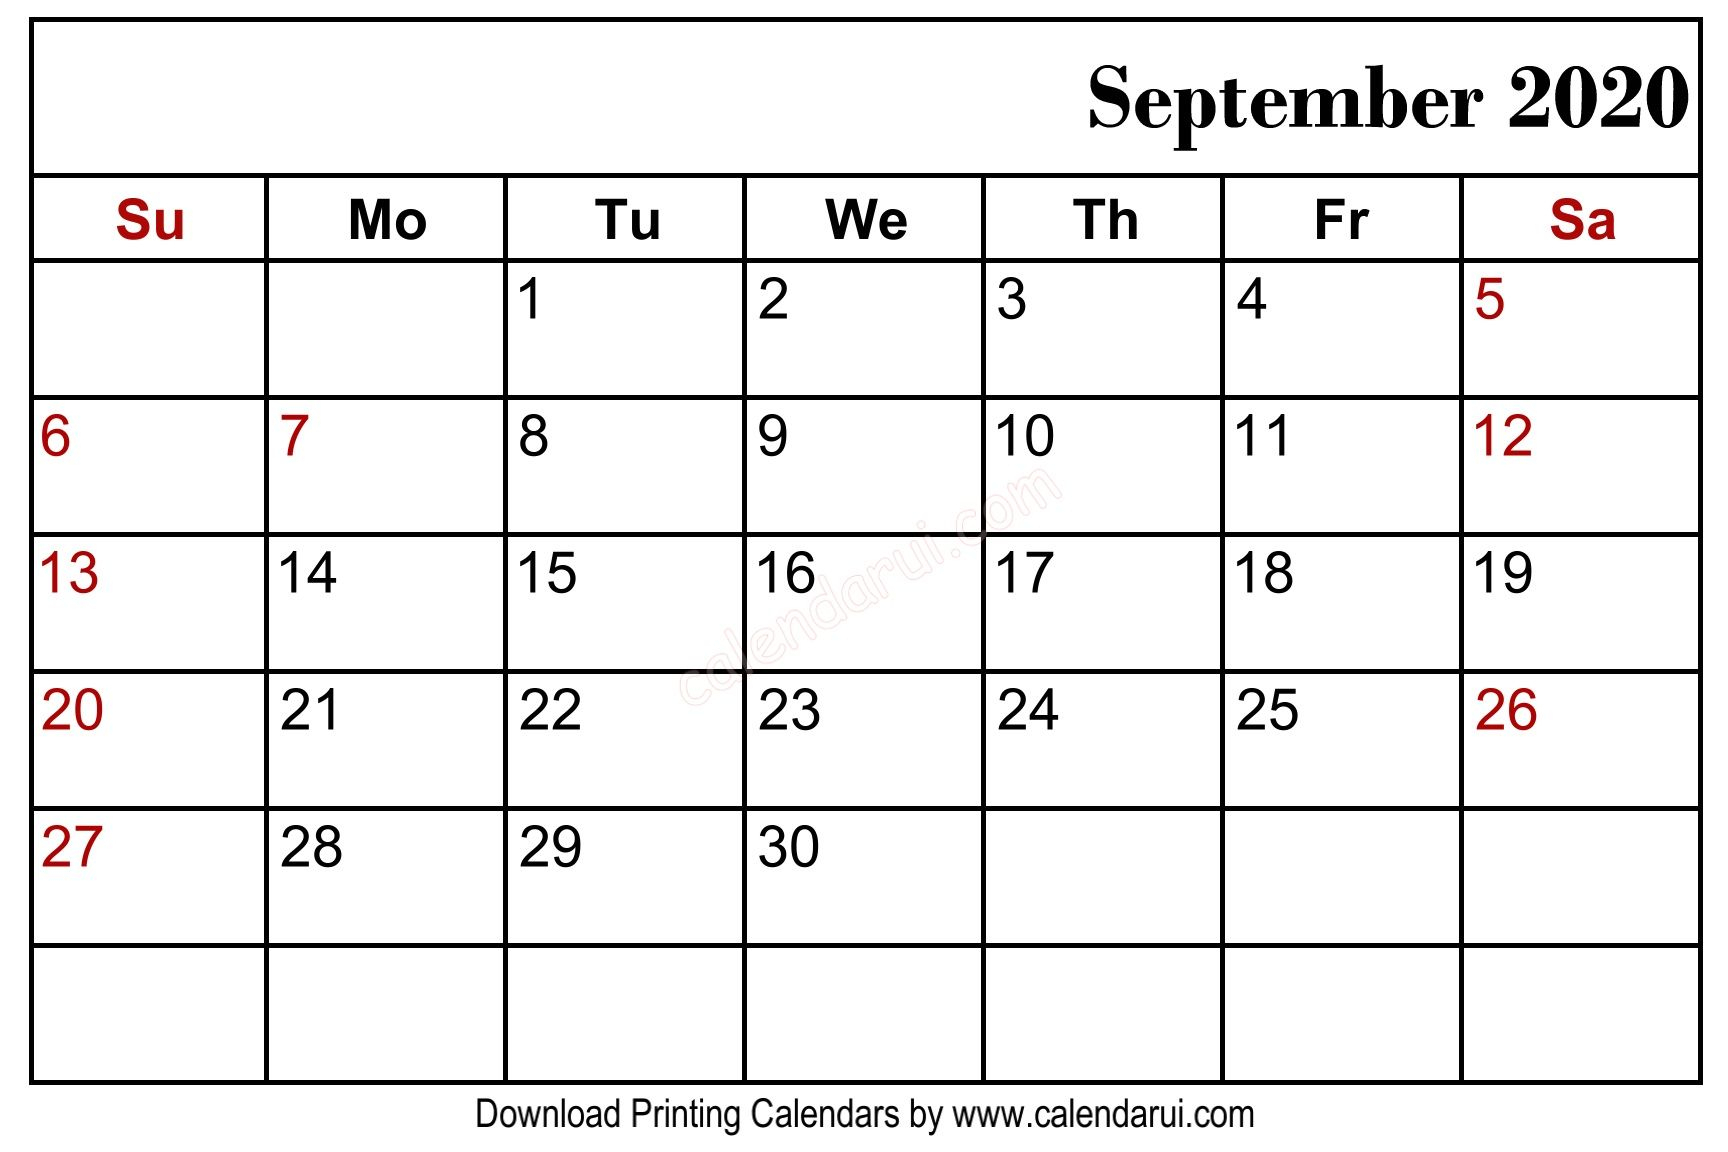 September 2020 Blank Calendar Printable Free Download